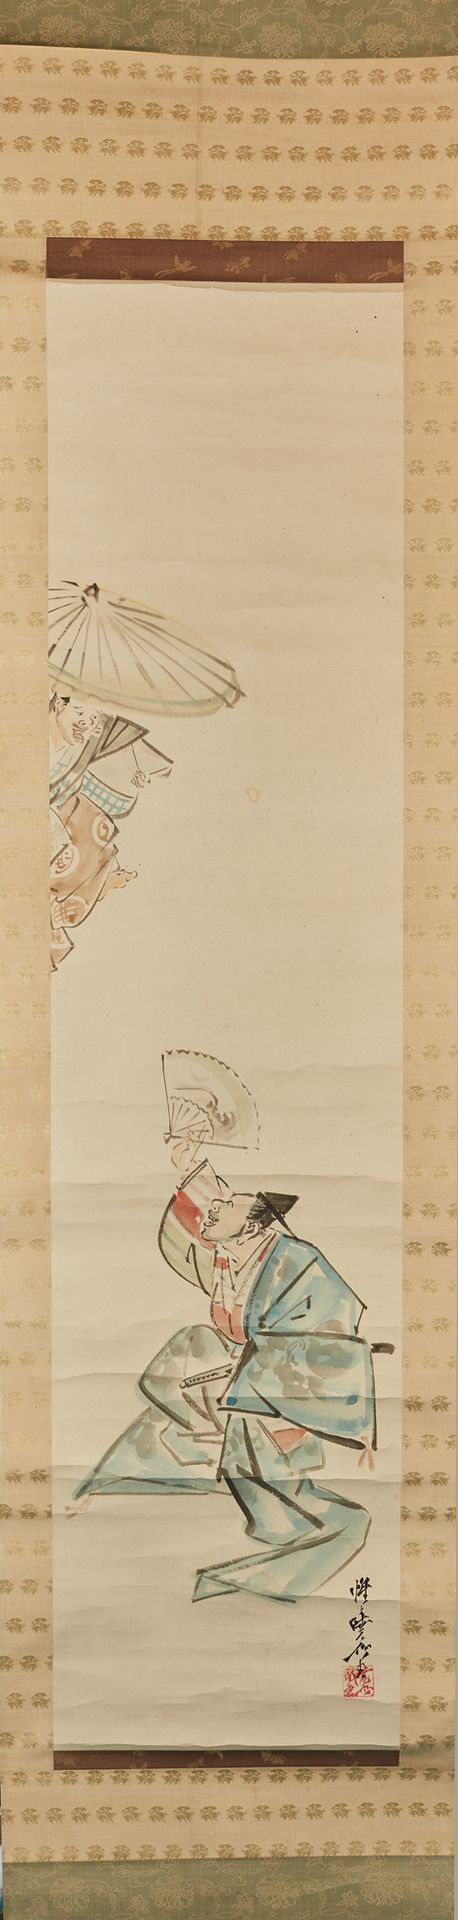 Kawanabe Kyosai (1831-1889) Inchiostro policromo su carta, due ballerini. (Macch&hellip;